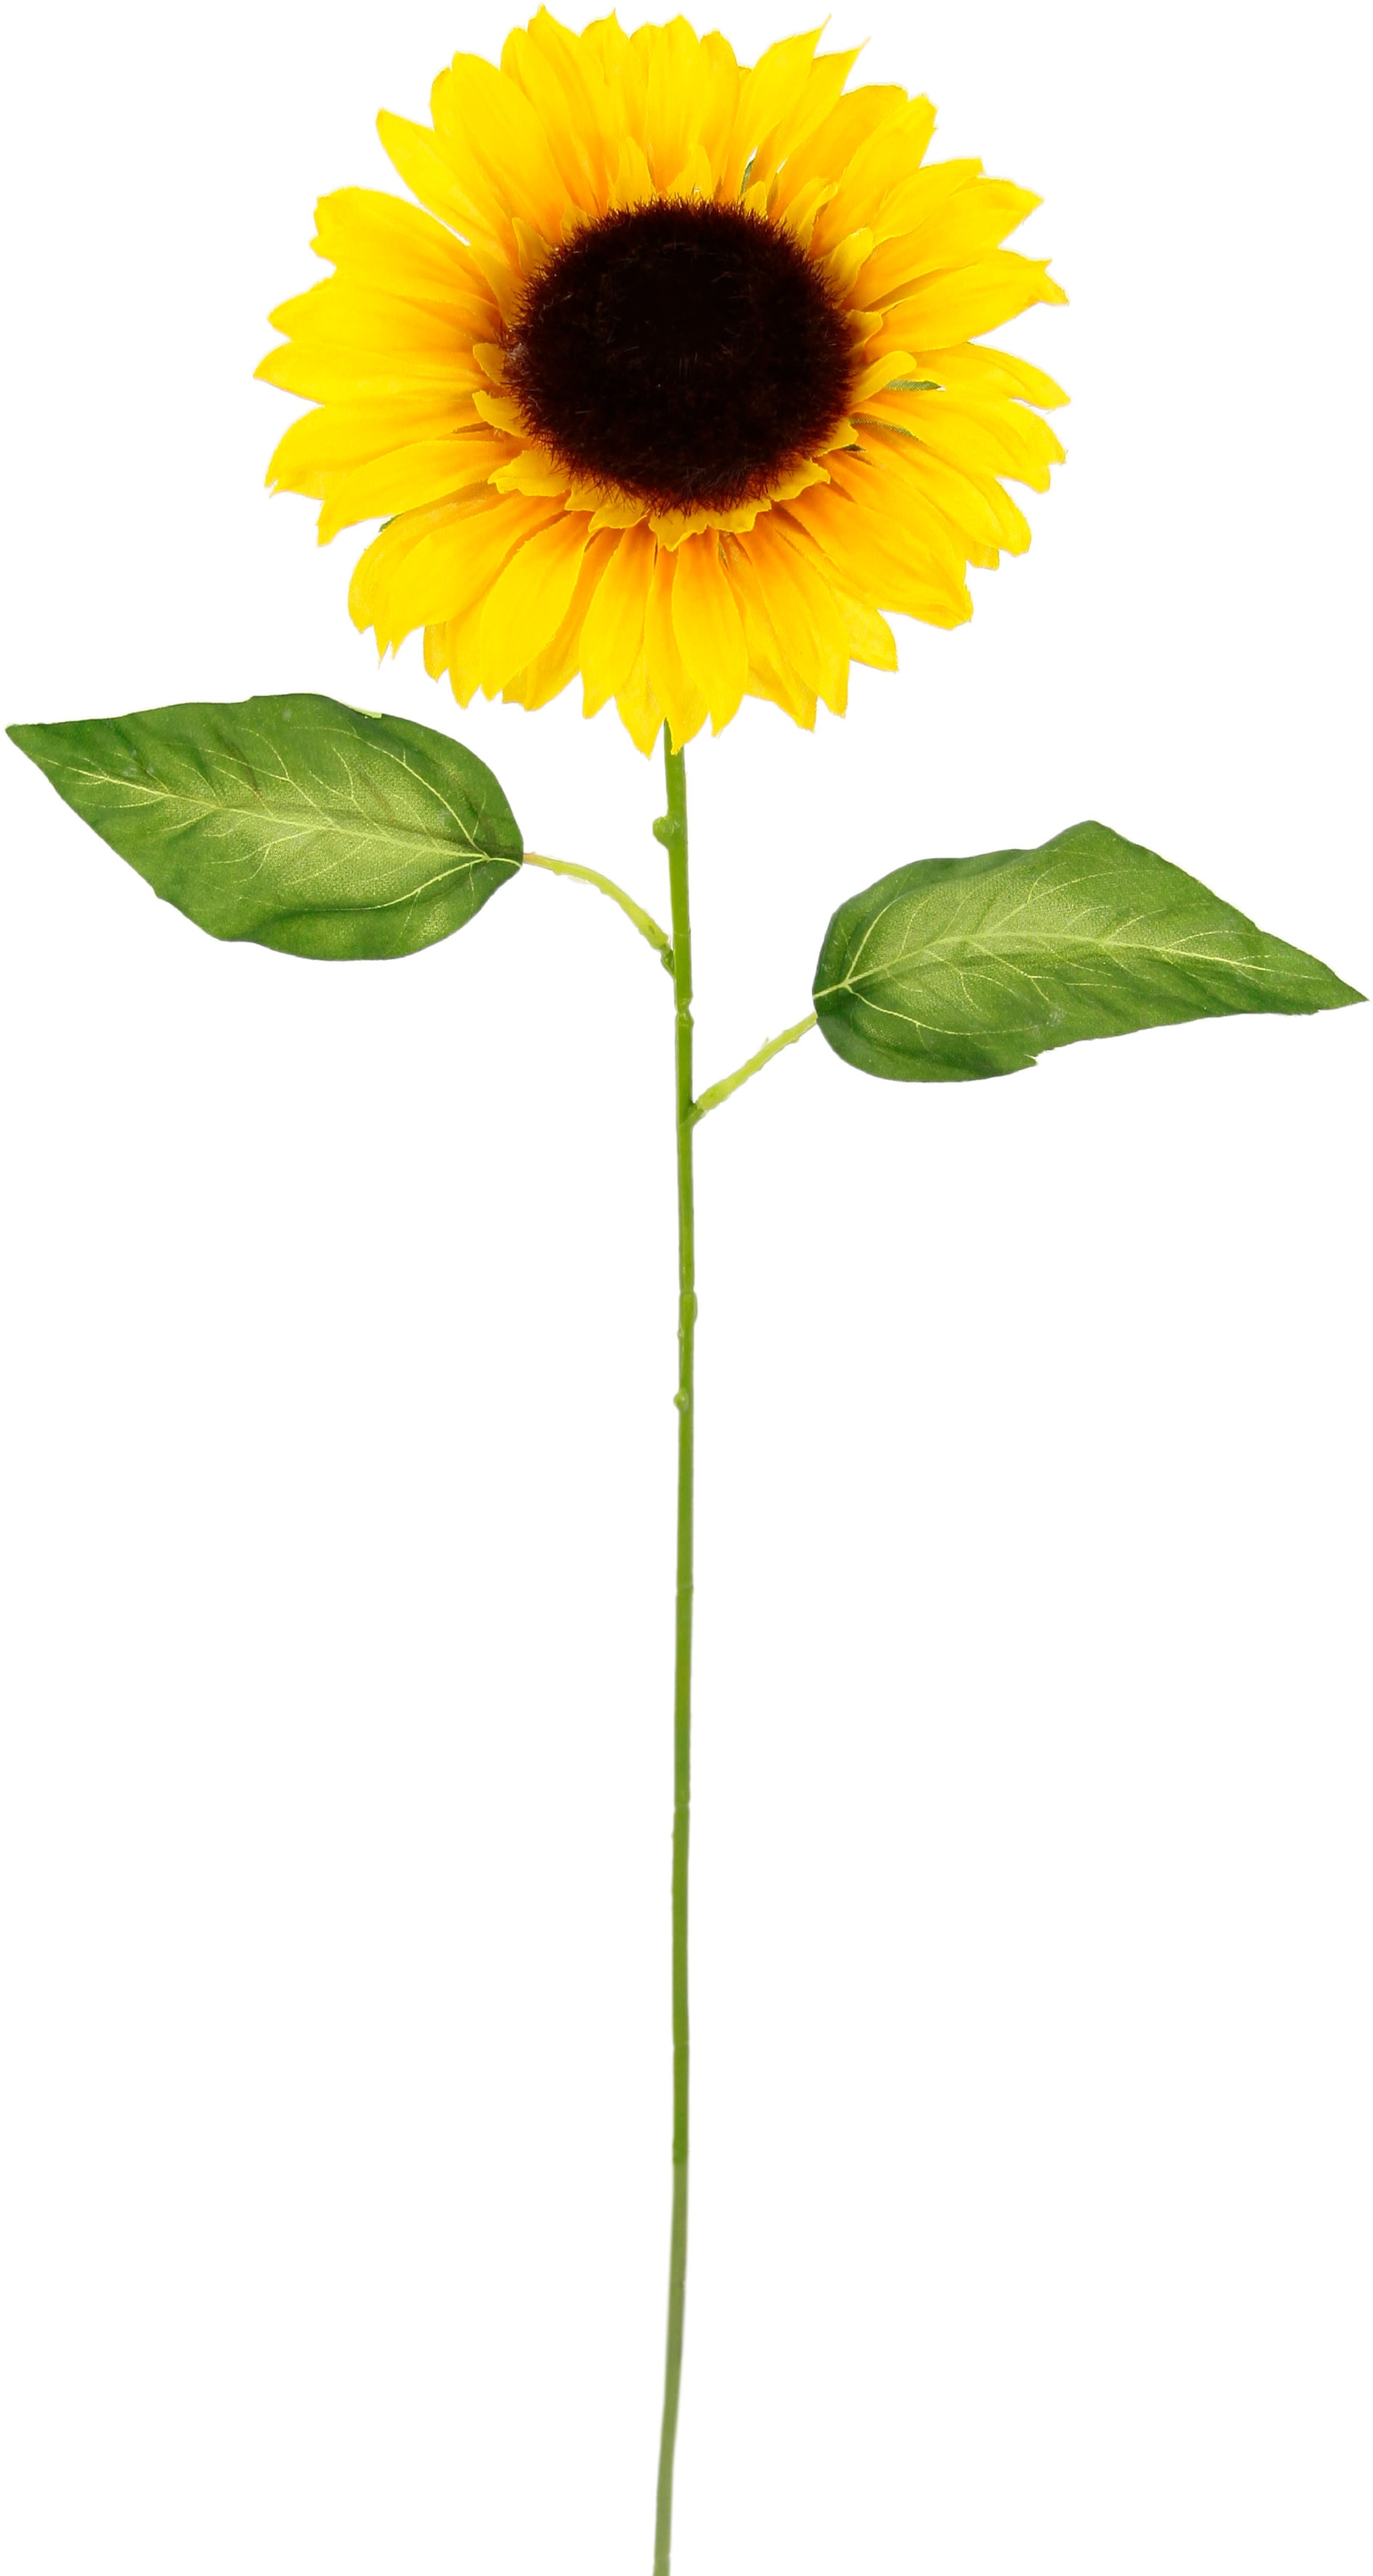 I.GE.A. Kunstblume »Sonnenblume«, (5 bei 5er Einzelblume, Stielblume, St.), OTTO Set